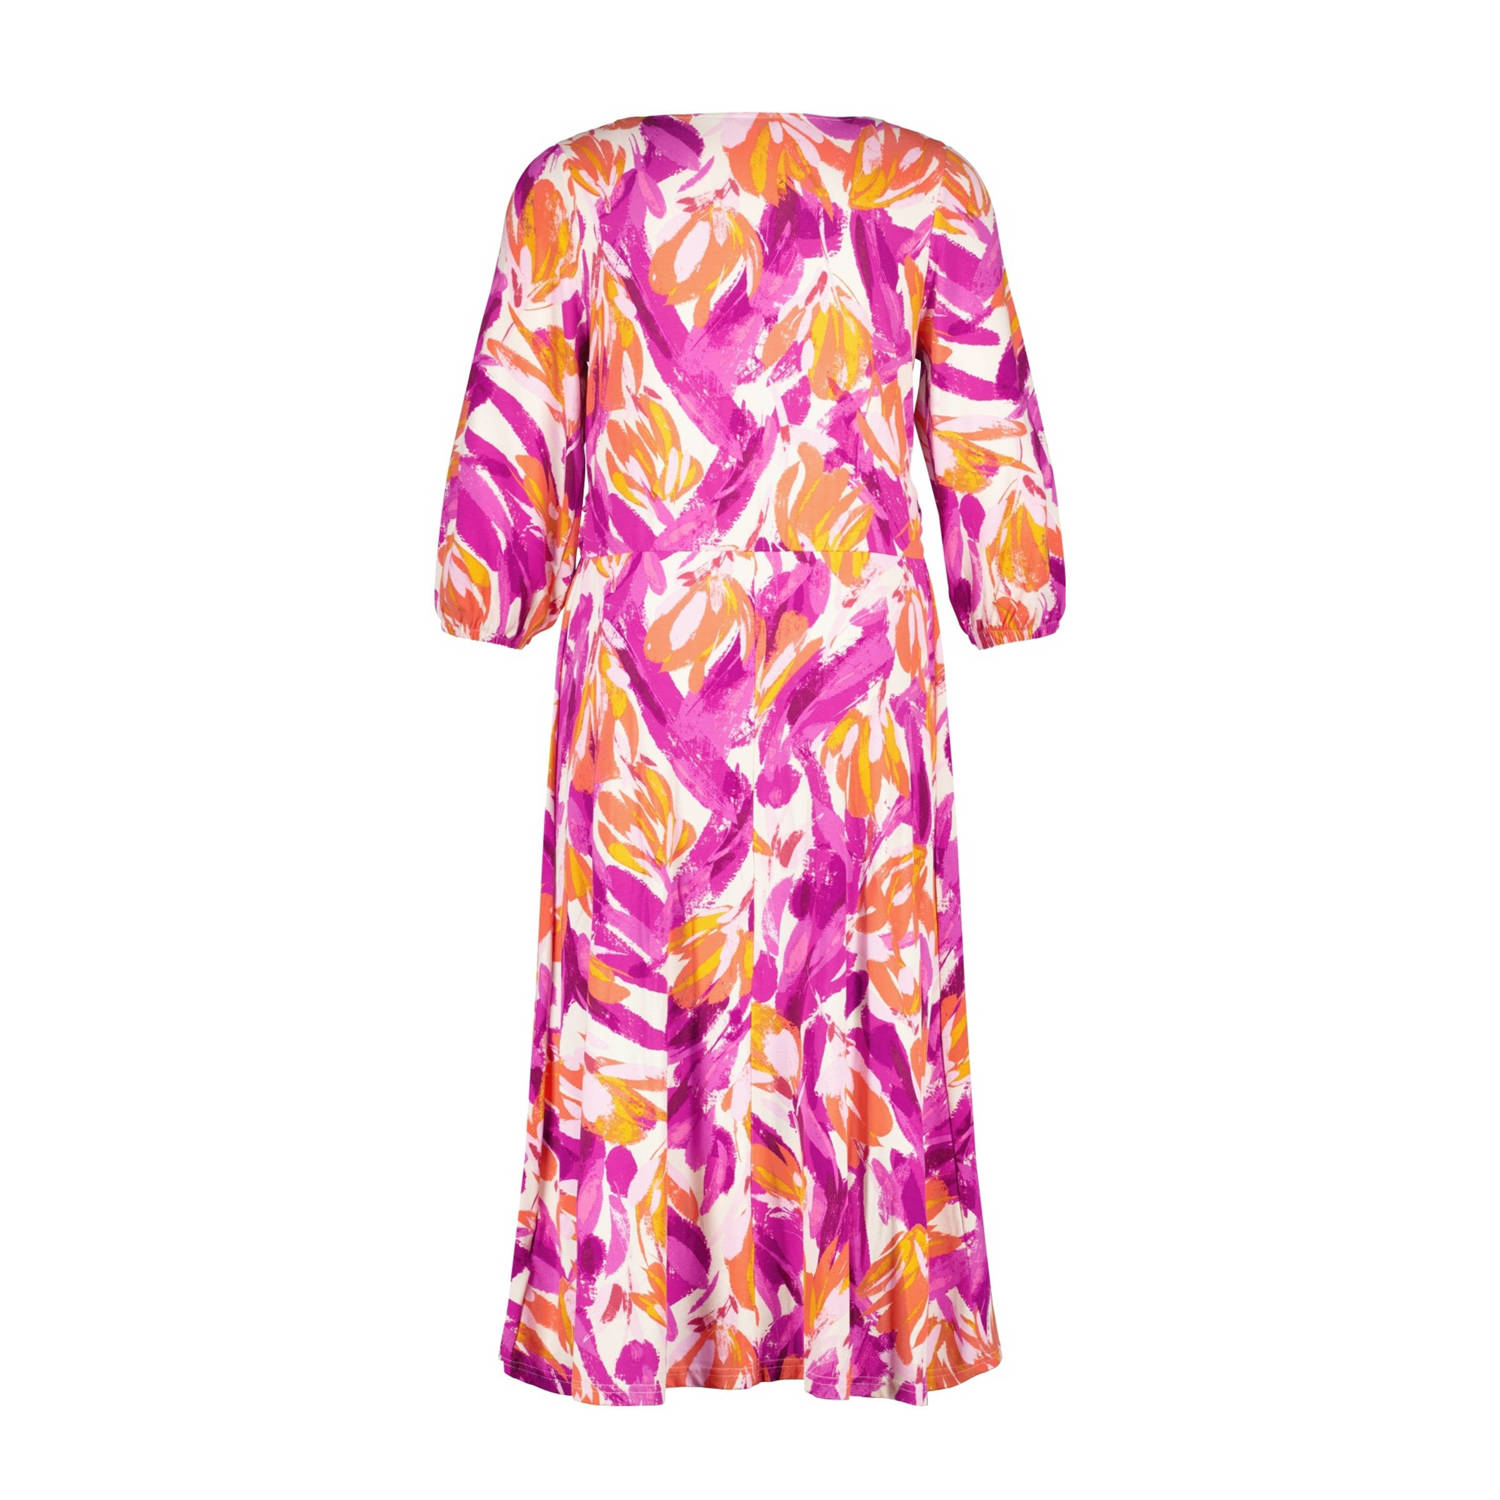 MS Mode jurk met all over print paars oranje ecru